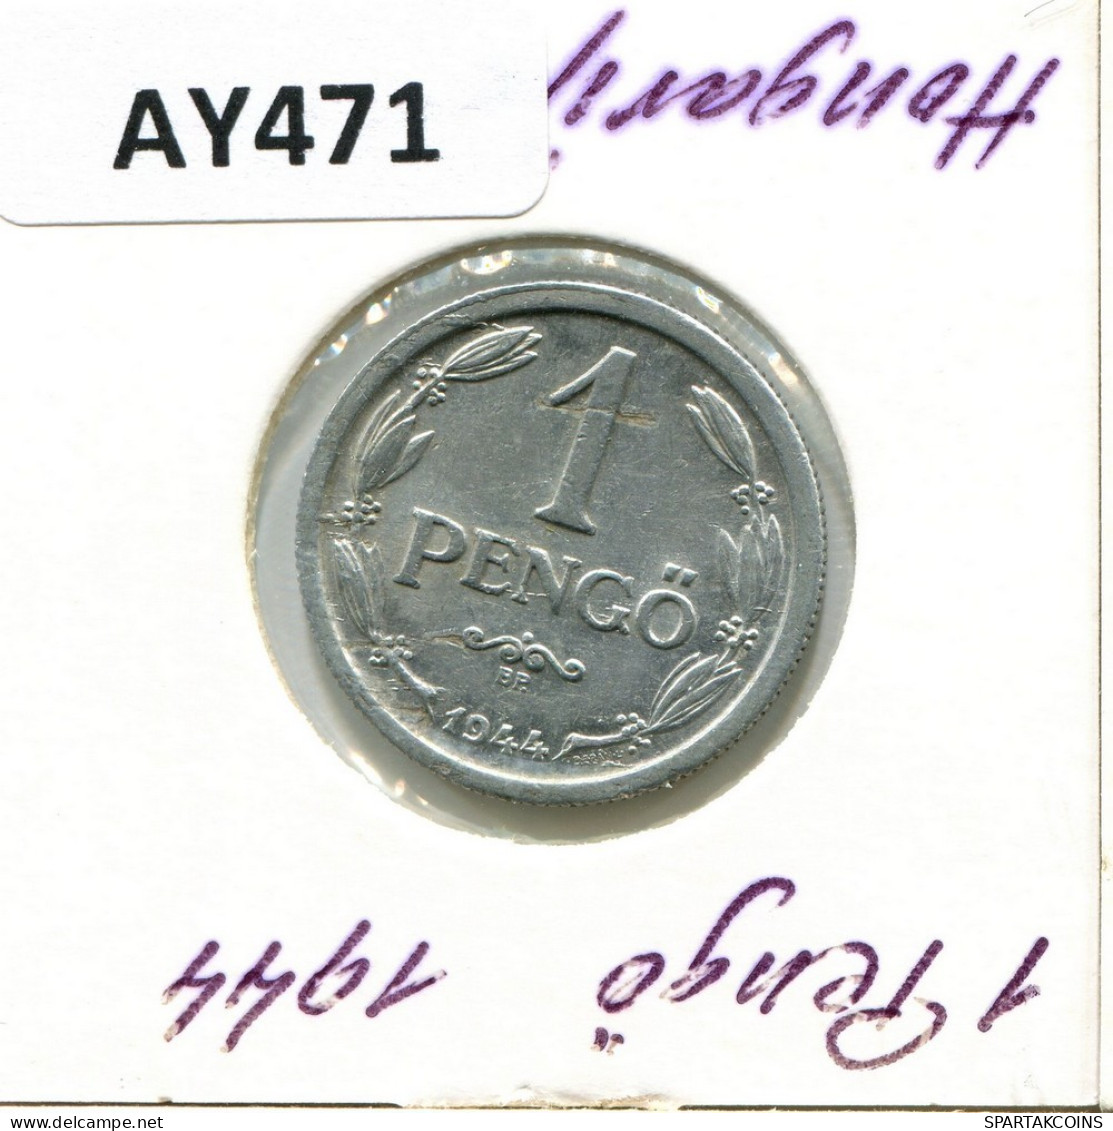 1 PENGO 1944 HUNGARY Coin #AY471.U.A - Hongarije